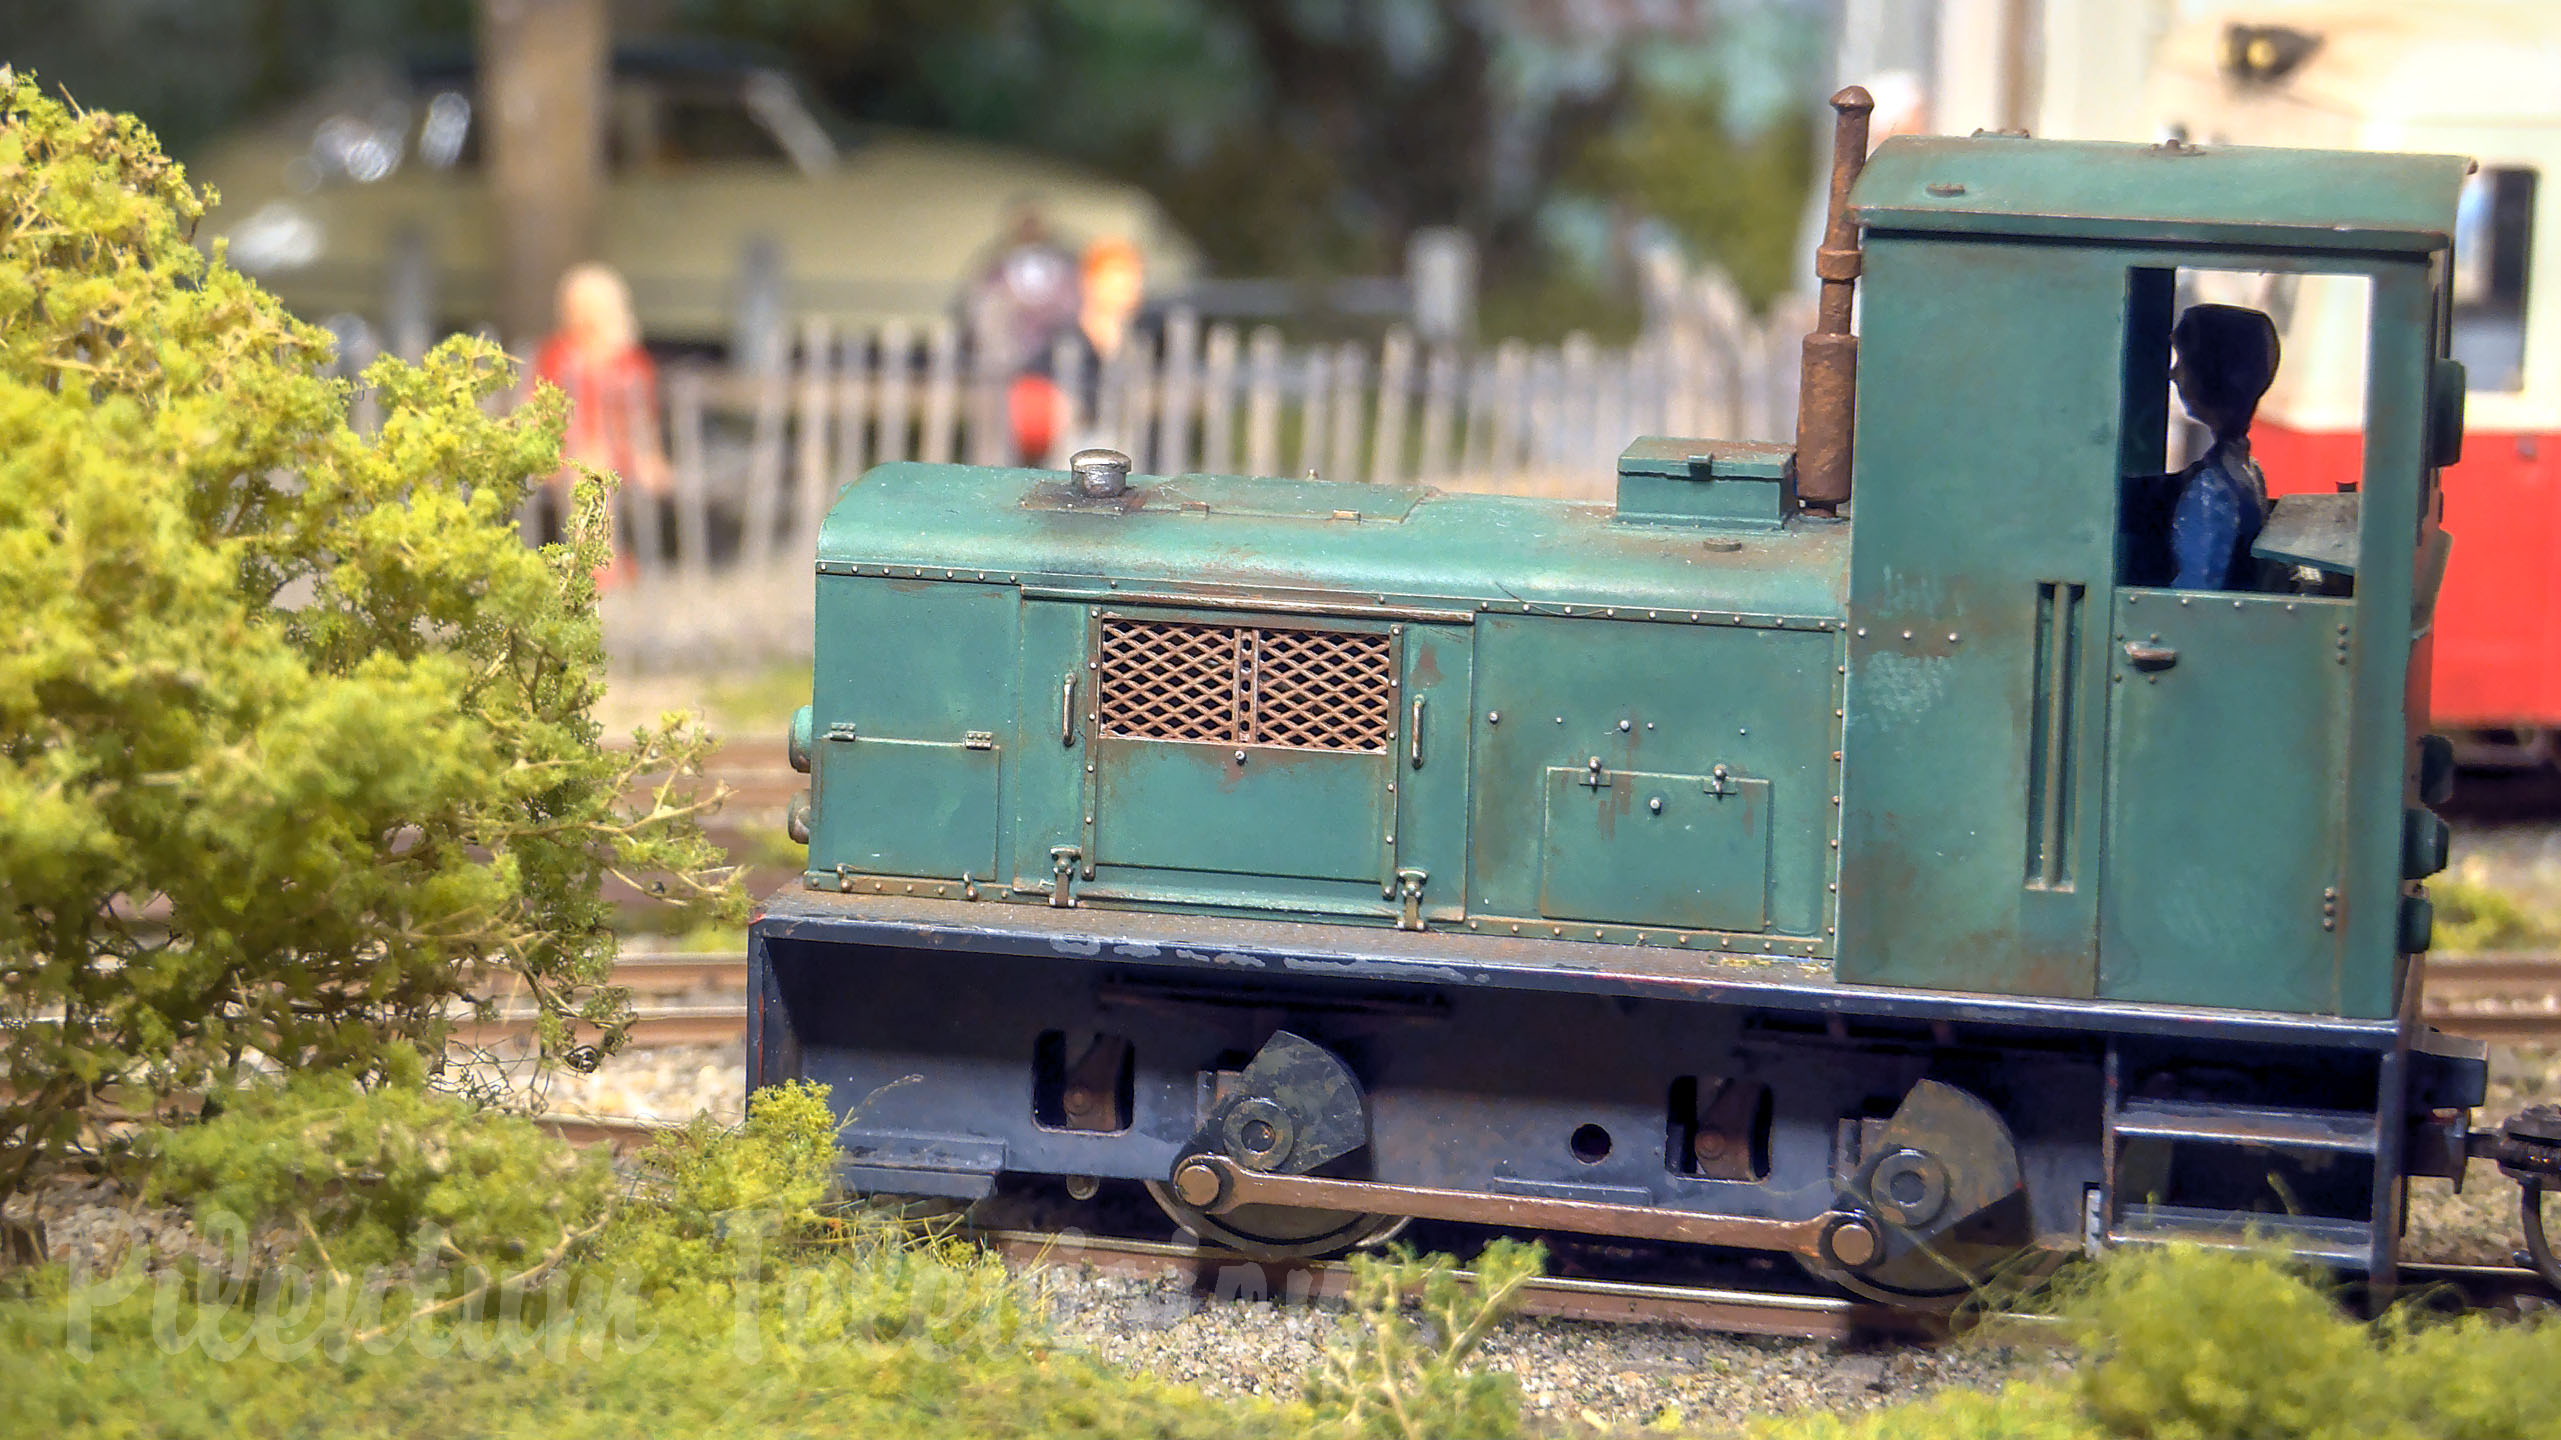 Best Place to Visit in France: Jean-Ville - Realistic O Scale Model Train Layout by Jan van Remmerden